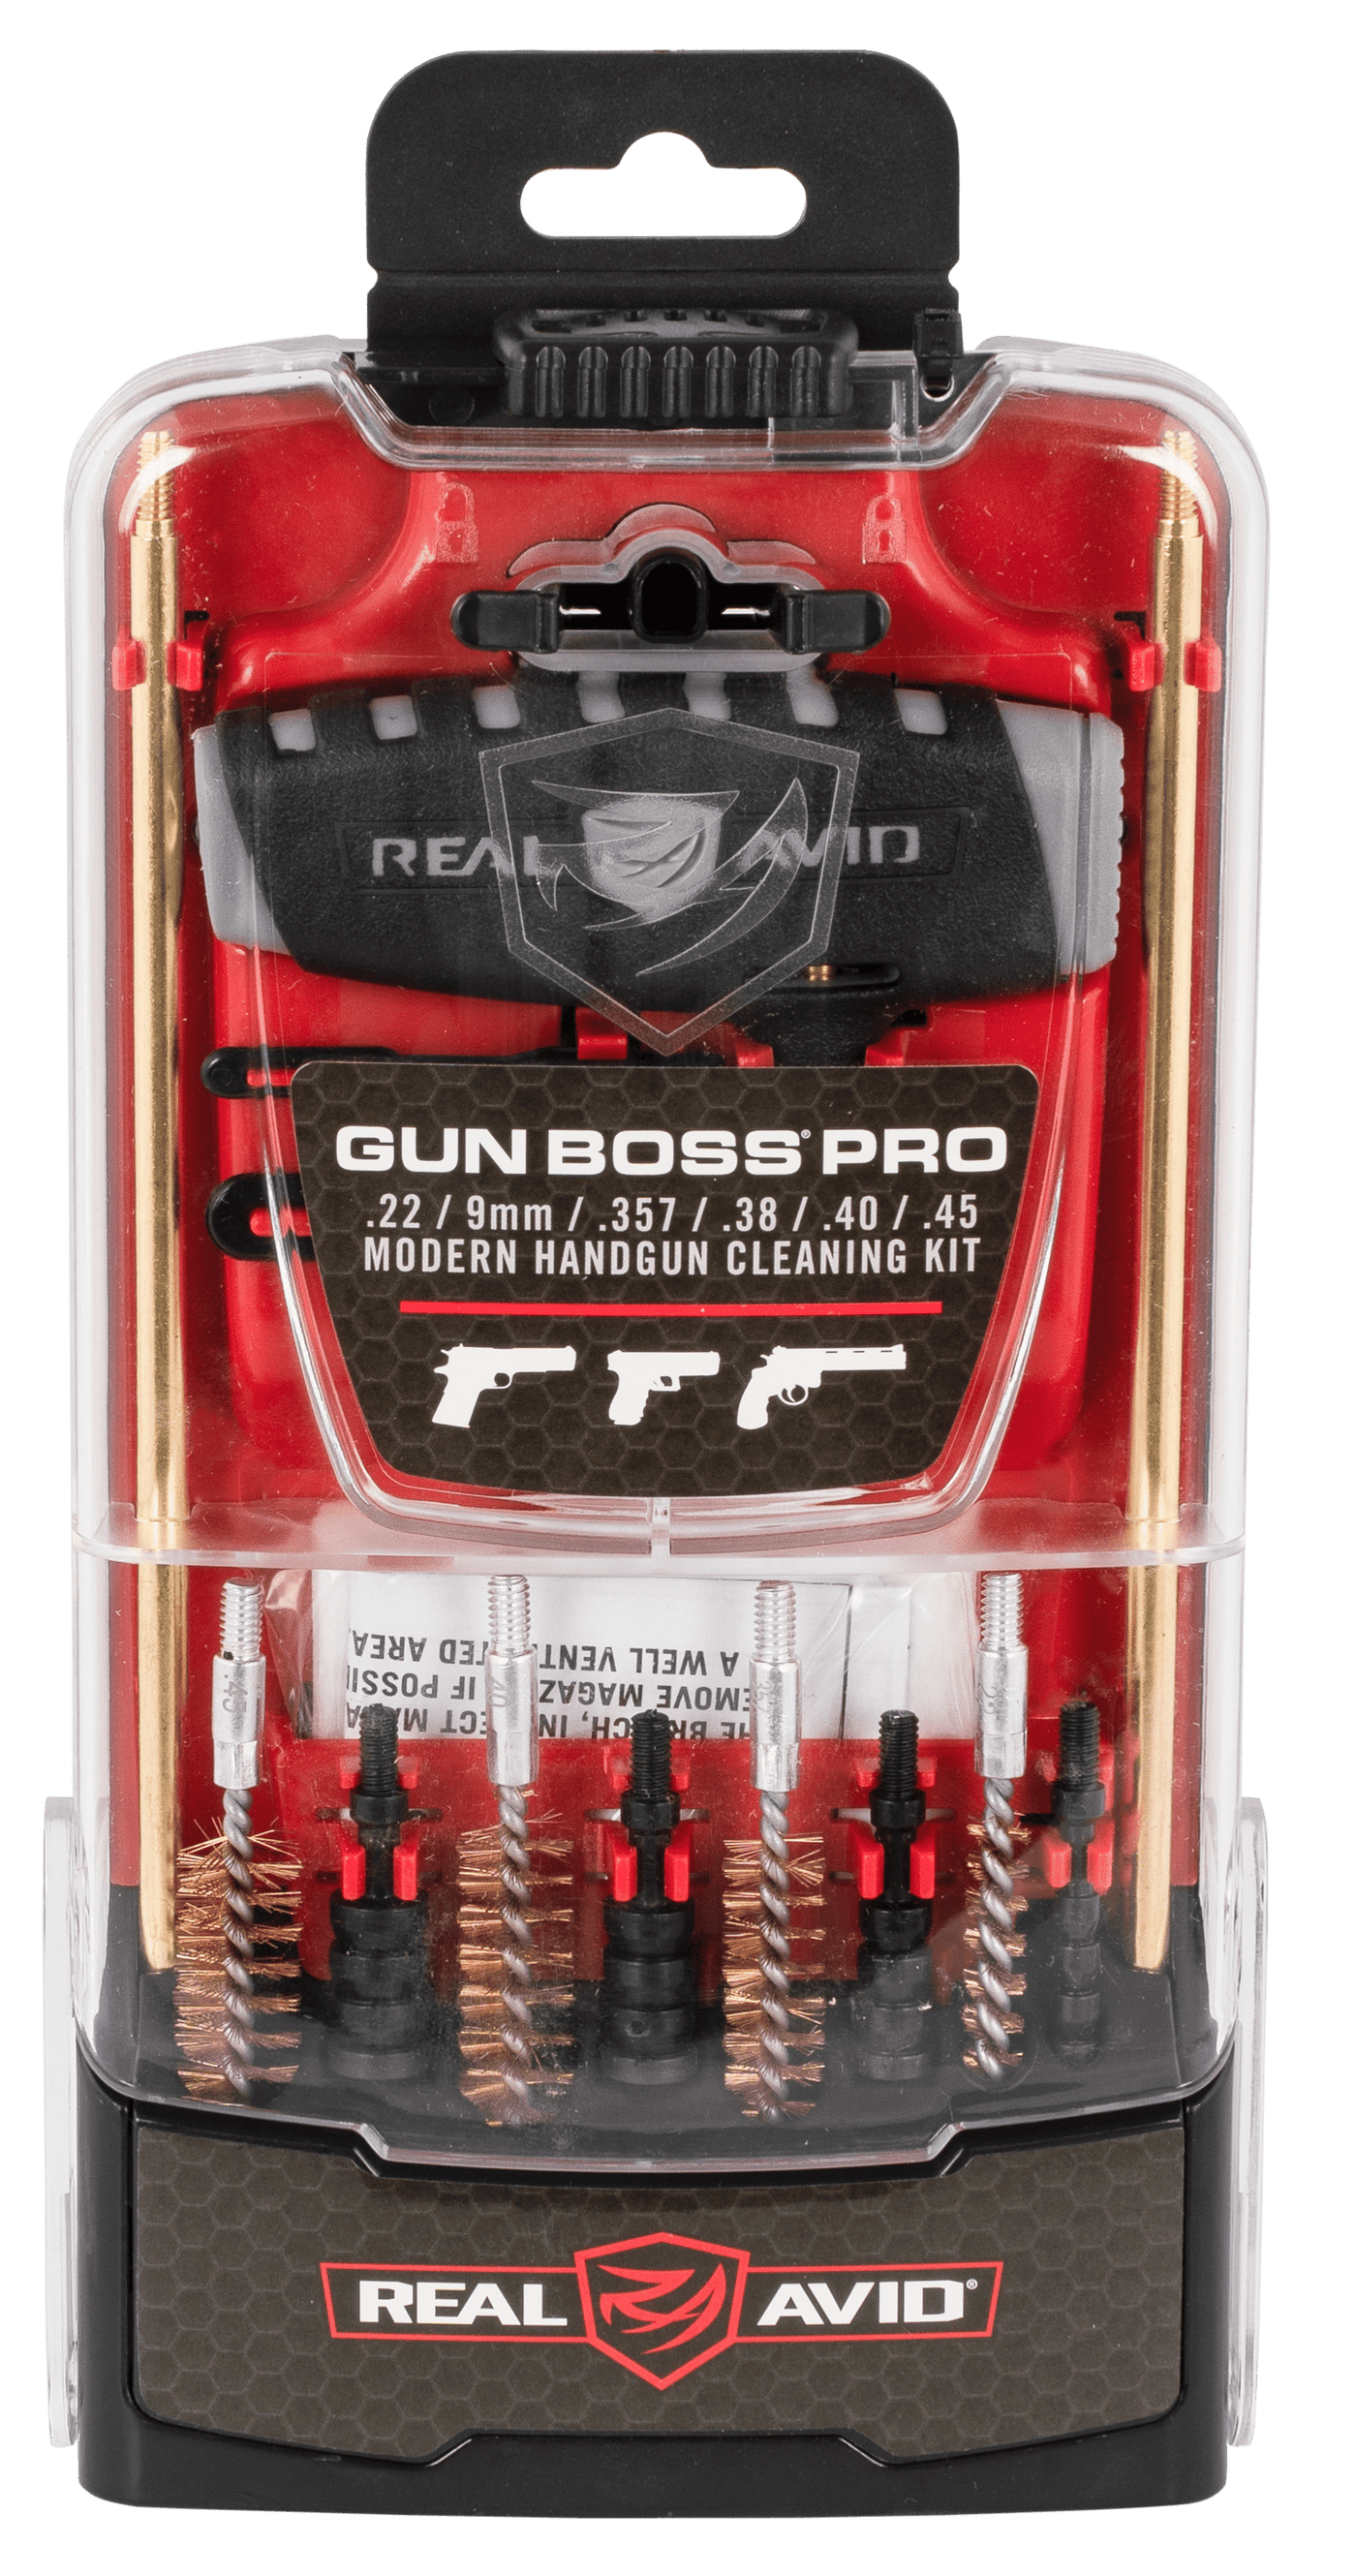 Real Avid Real Avid Gun Boss Pro Handgun - Cleaning Kit 15-piece Cleaning Kits